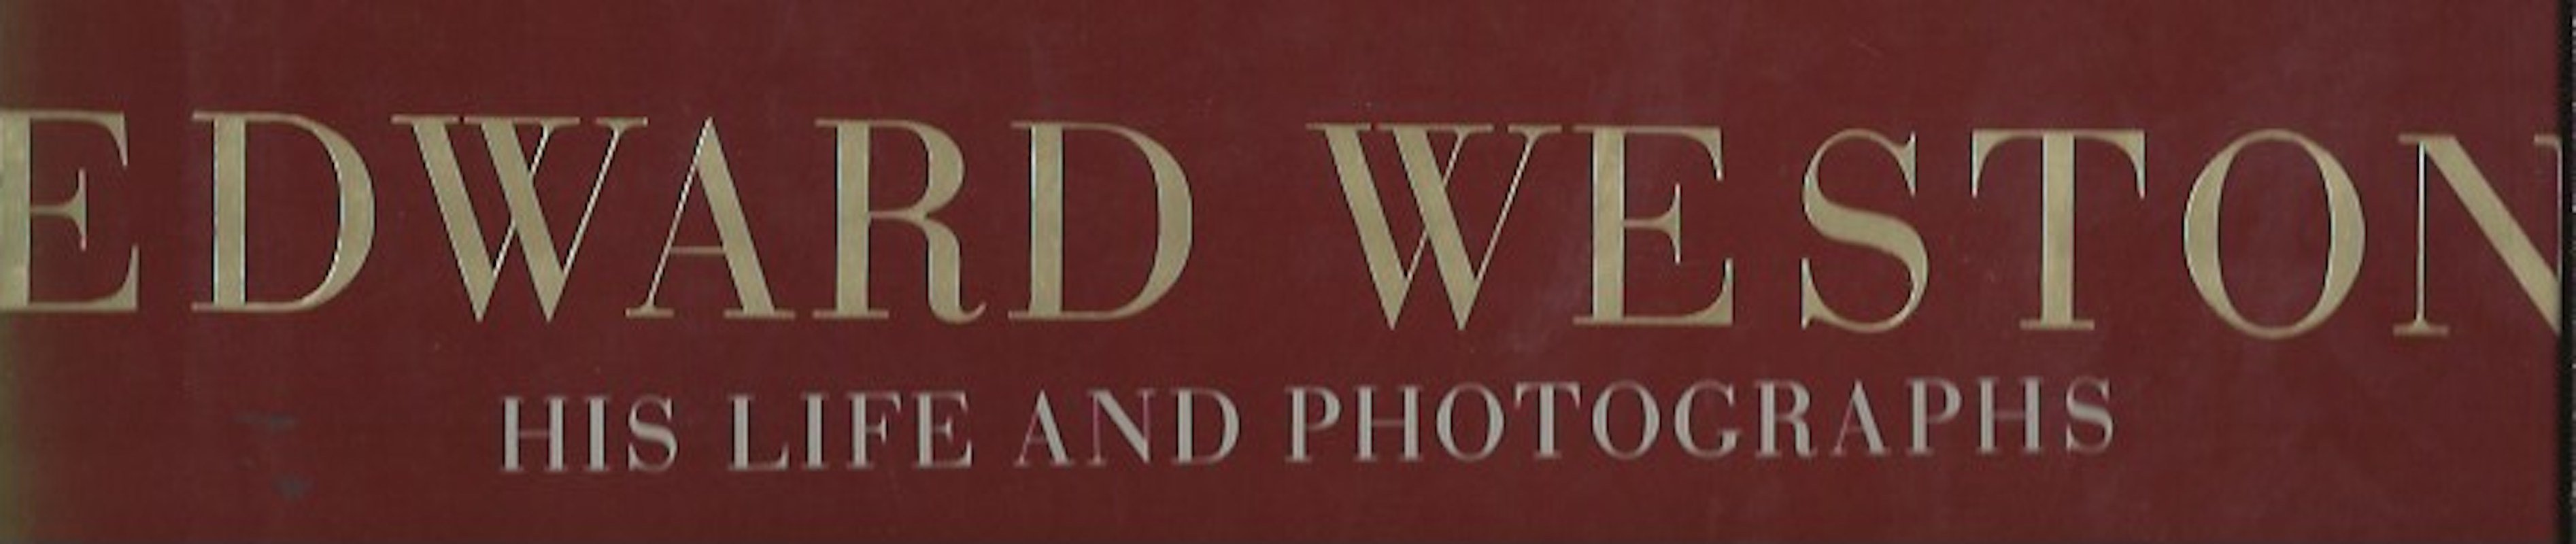 Edward Weston - His Life and Photographs by Maddow, Ben